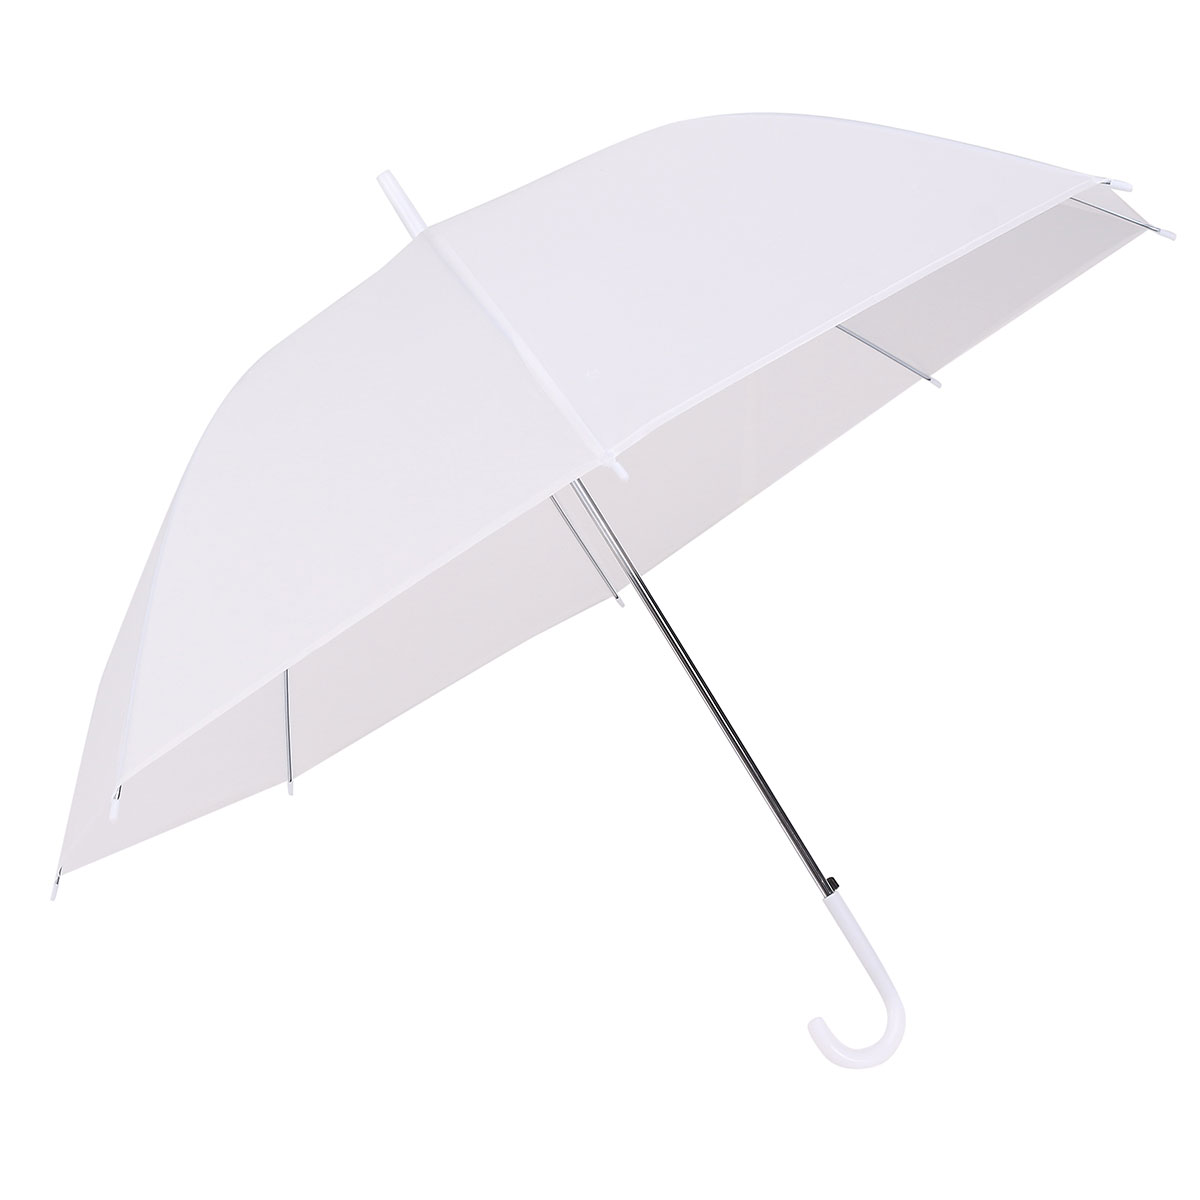 

Dome Белый прозрачный зонтик Большой прозрачный скраб Паразол Sun Rain для дам Свадебное